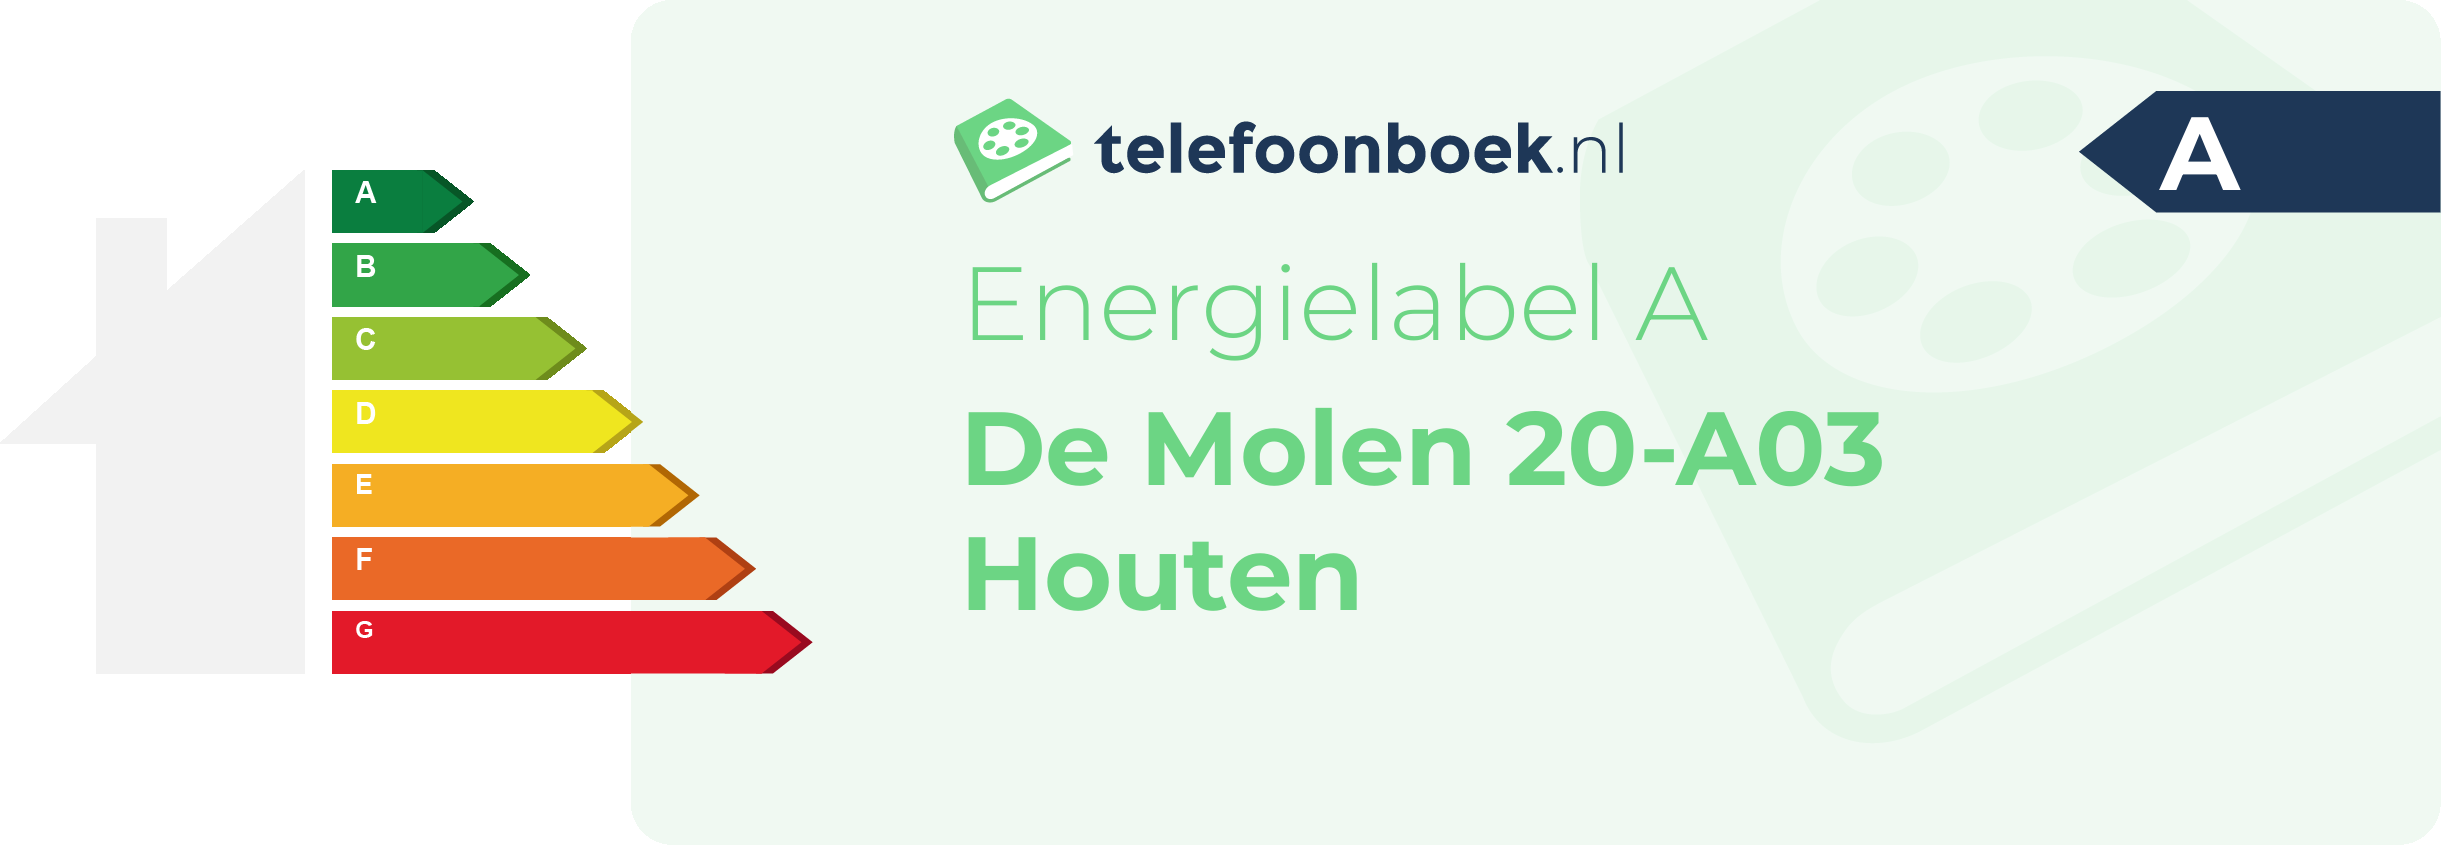 Energielabel De Molen 20-A03 Houten